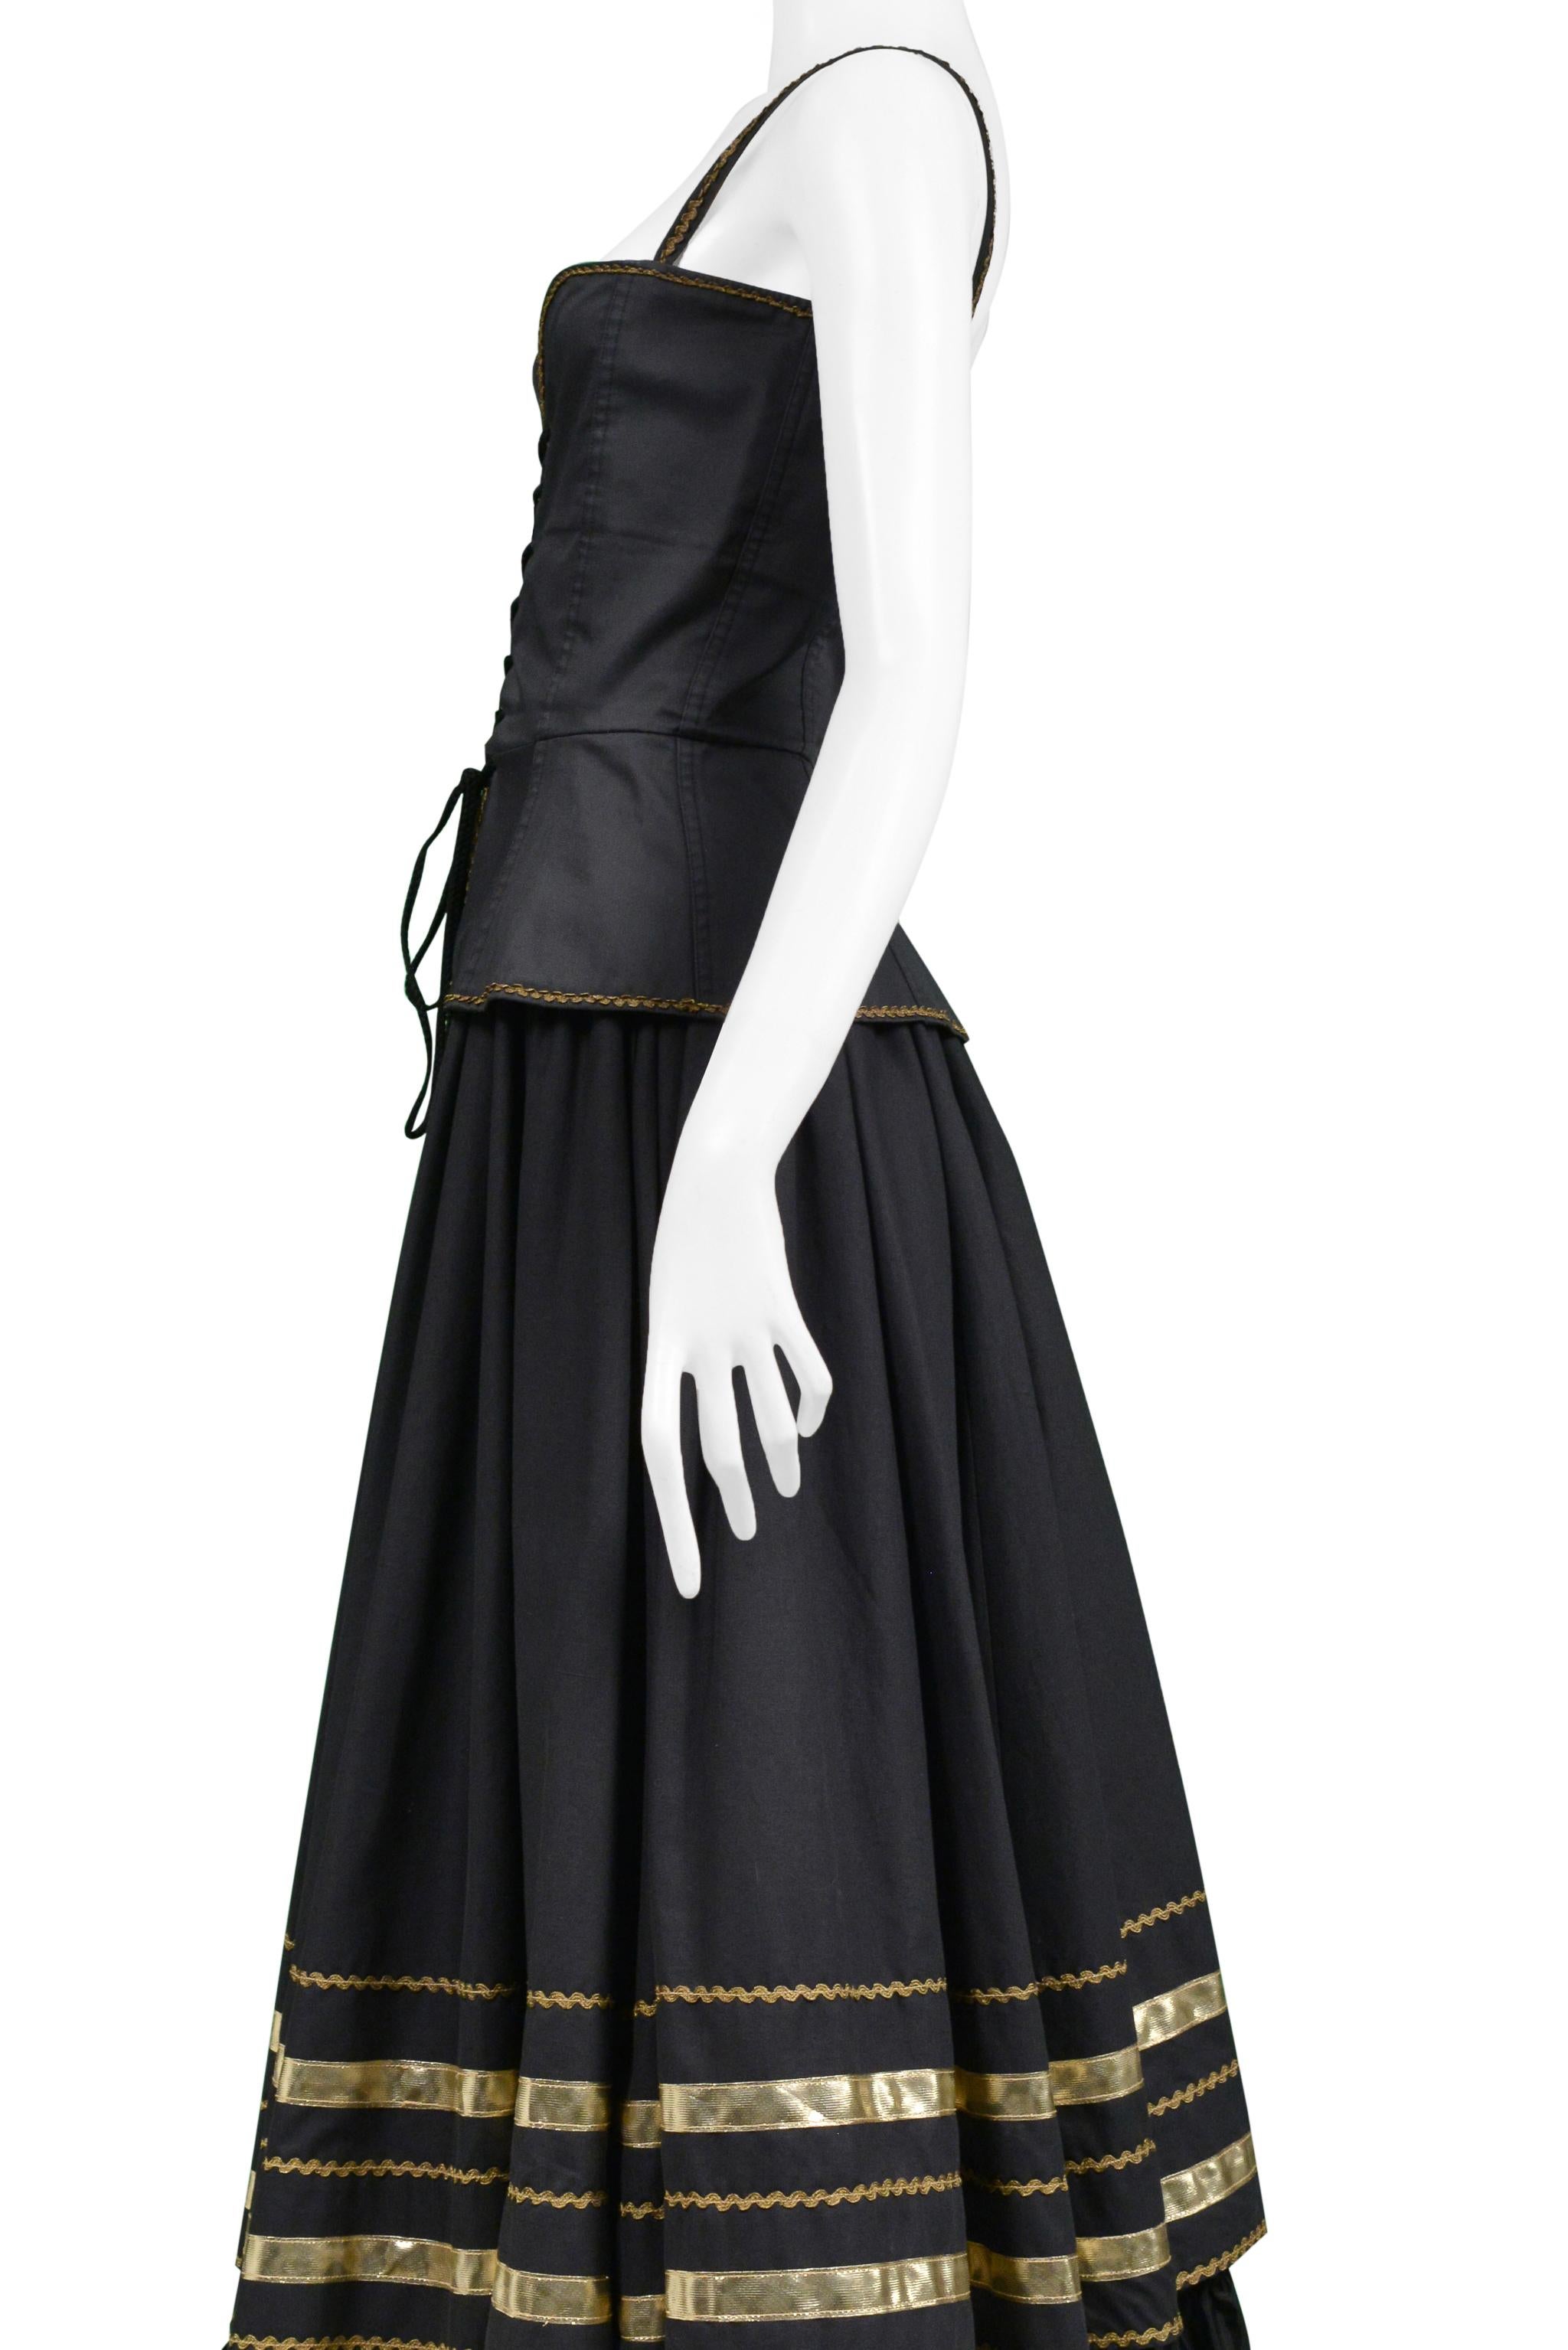 Yves Saint Laurent Ysl Black & Gold Corset Top & Fancy Peasant Skirt 1970s For Sale 3